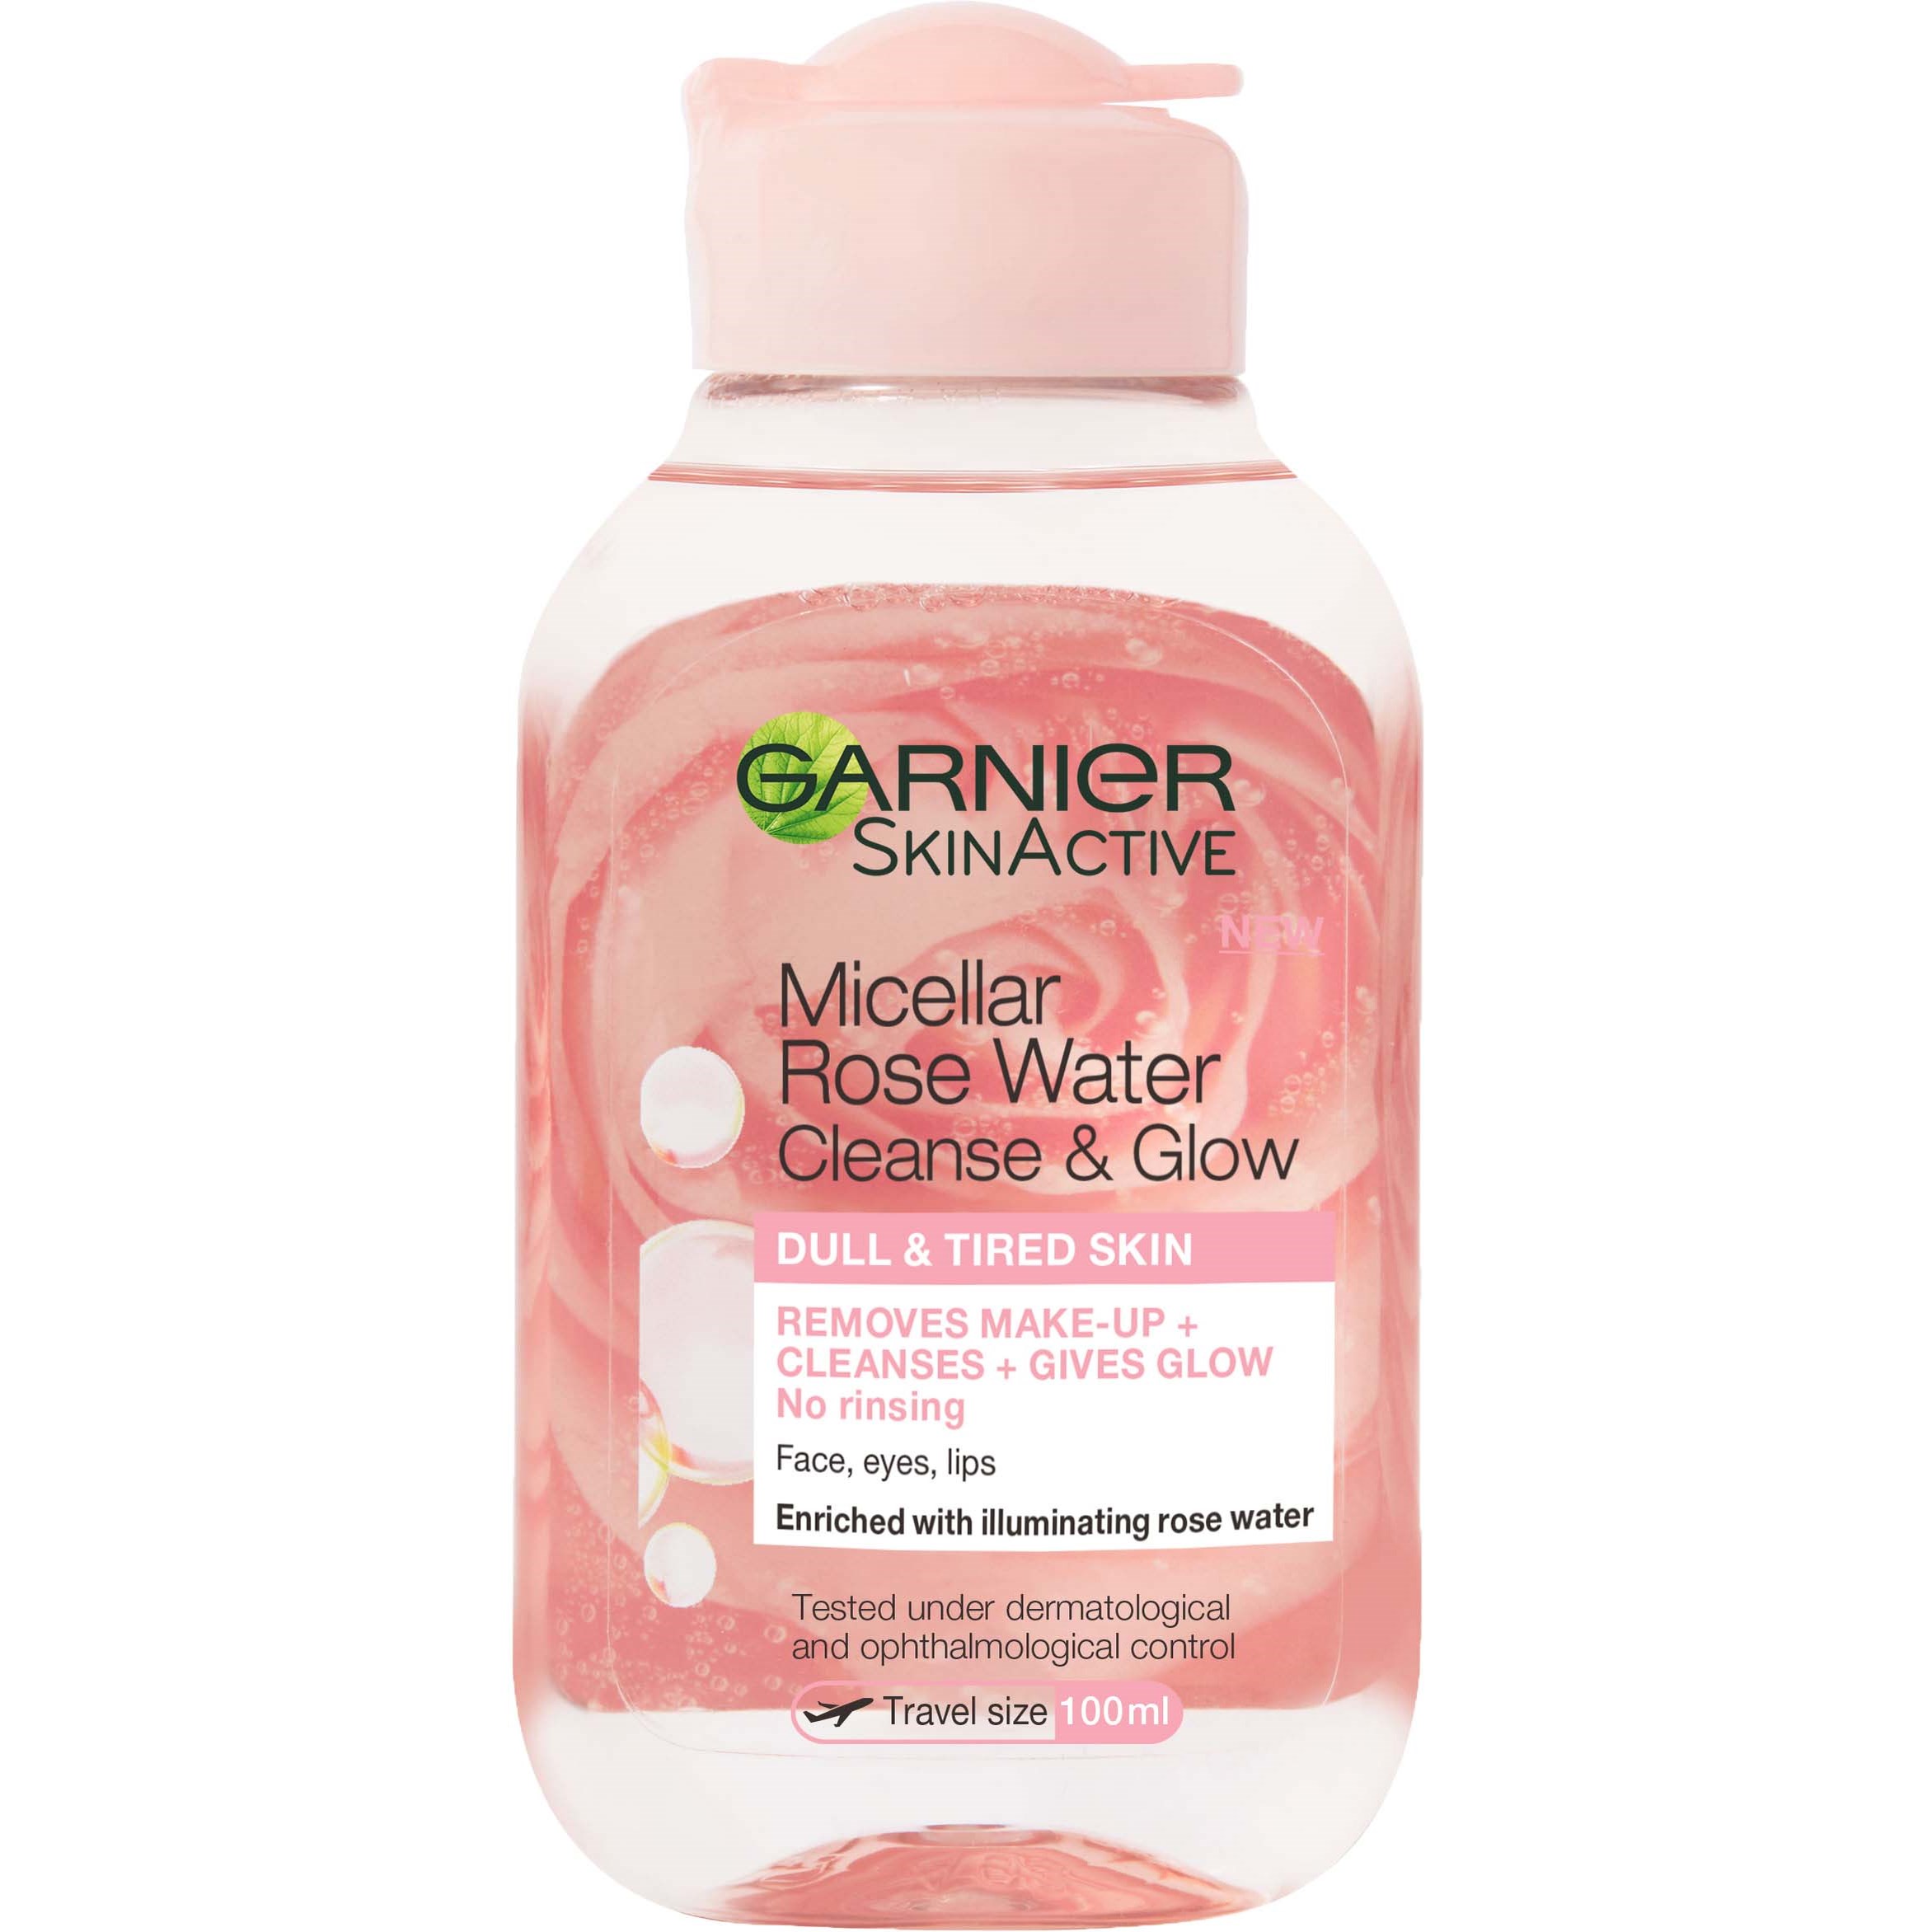 Garnier SkinActive Micellar Rose Water Cleanse & Glow